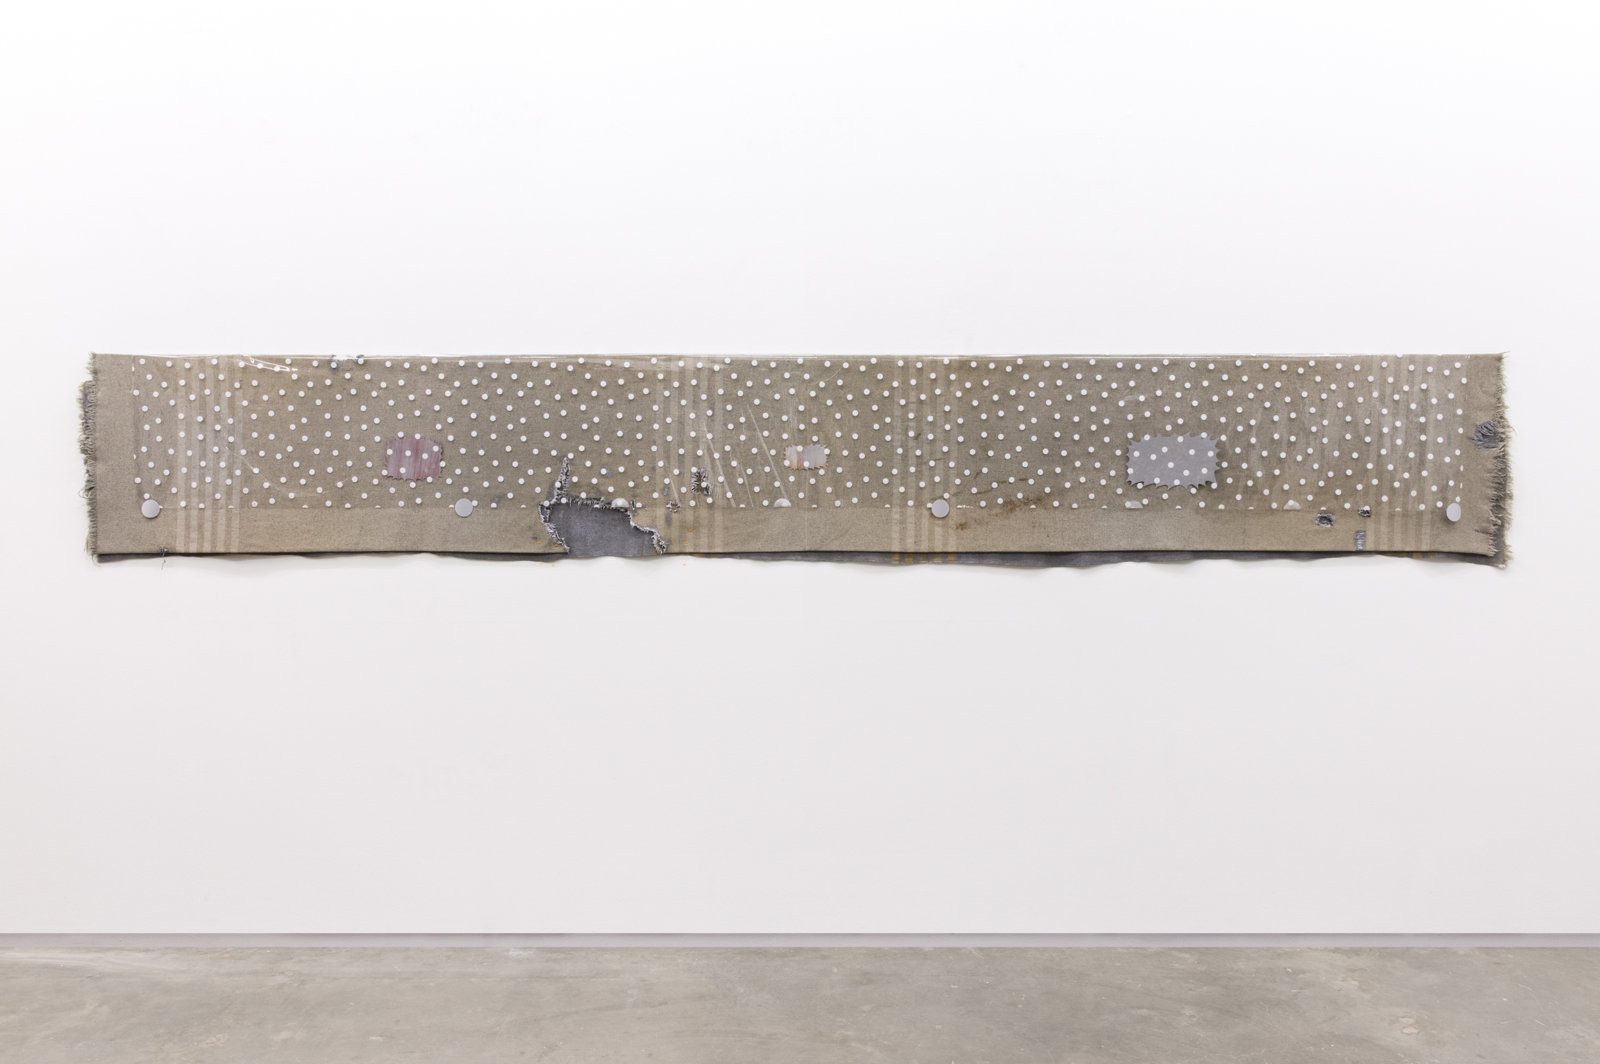 Liz Magor, Violator, 2015, wool, fabric, plastic, paper, polymerized gypsum, 24 x 160 in. (61 x 406 cm)